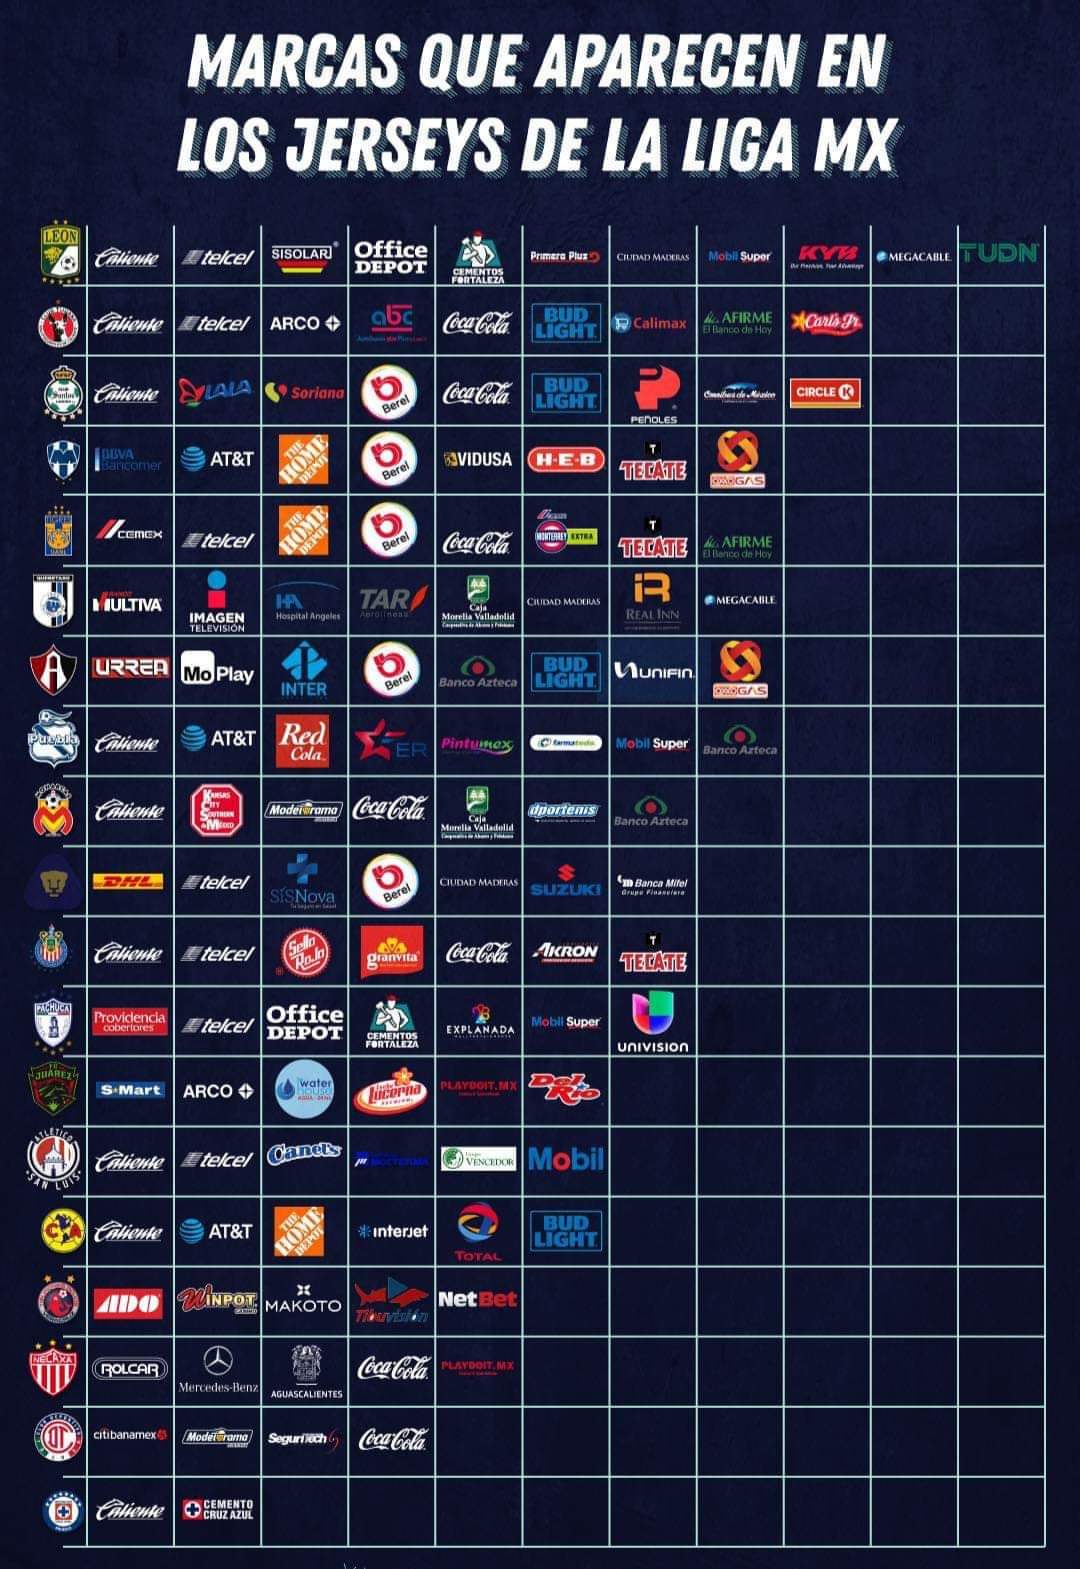 Overview of the 2020/2021 La Liga sponsors